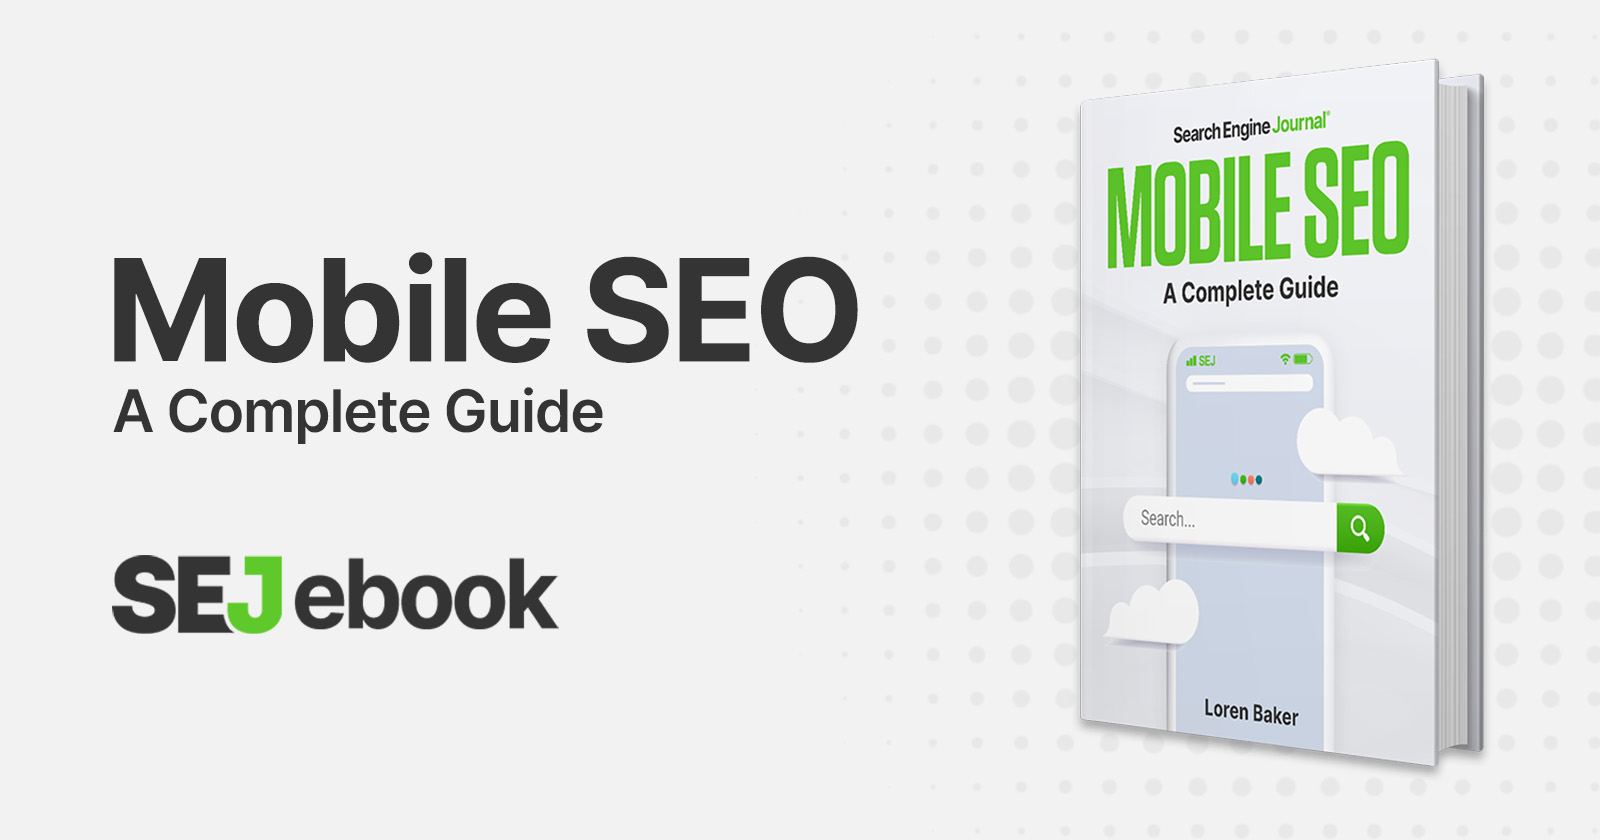 Mobile SEO: A Complete Guide [Ebook] via @sejournal, @lorenbaker